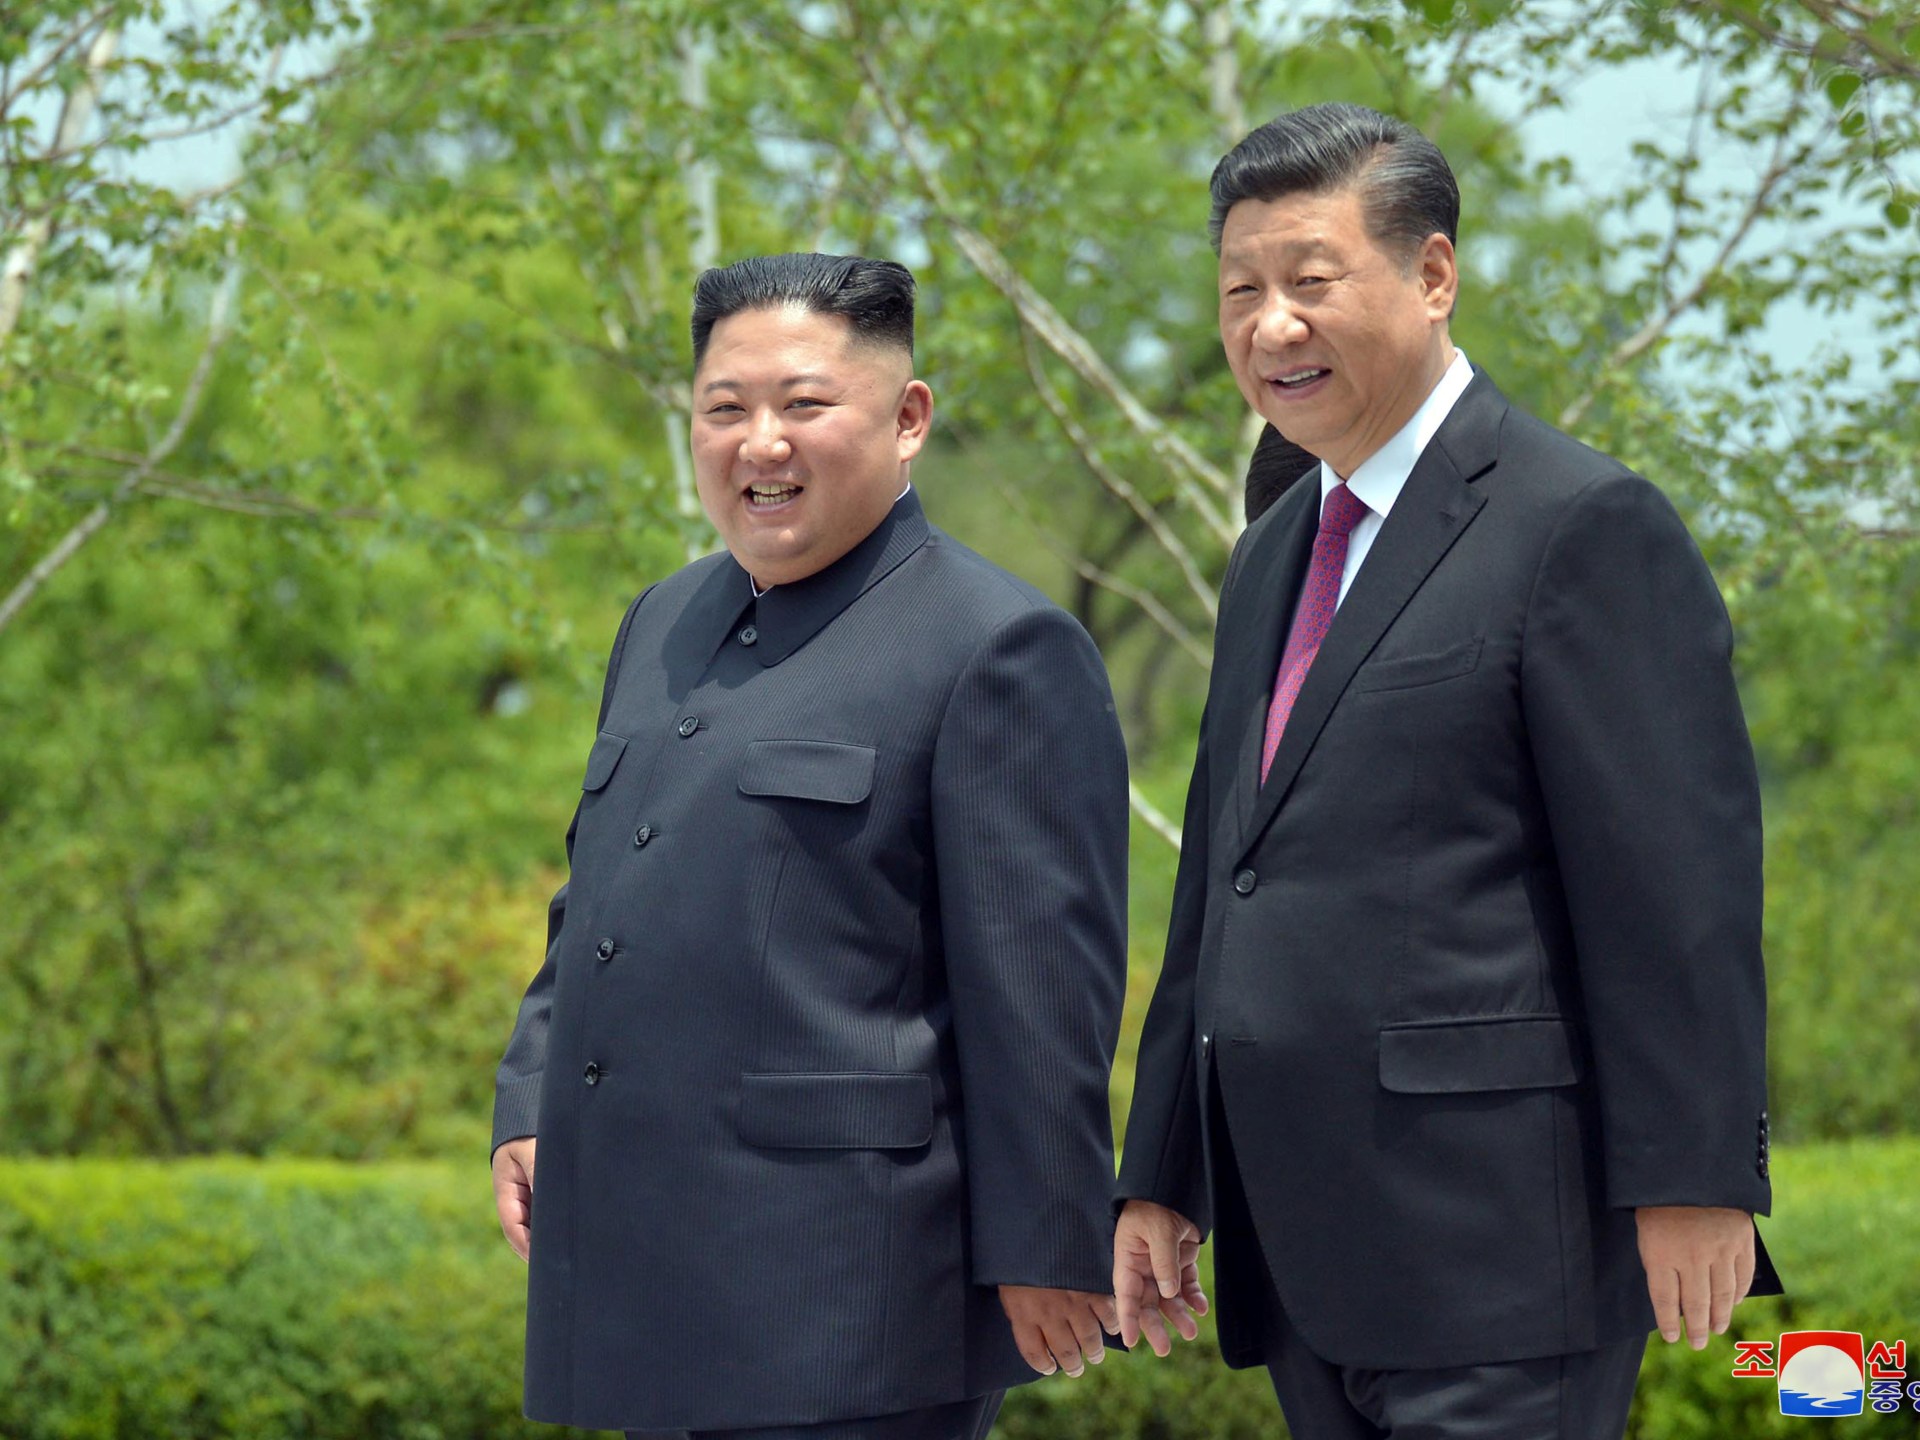 Xi tells Kim China wants to work with North Korea for peace: KCNA - Al Jazeera English